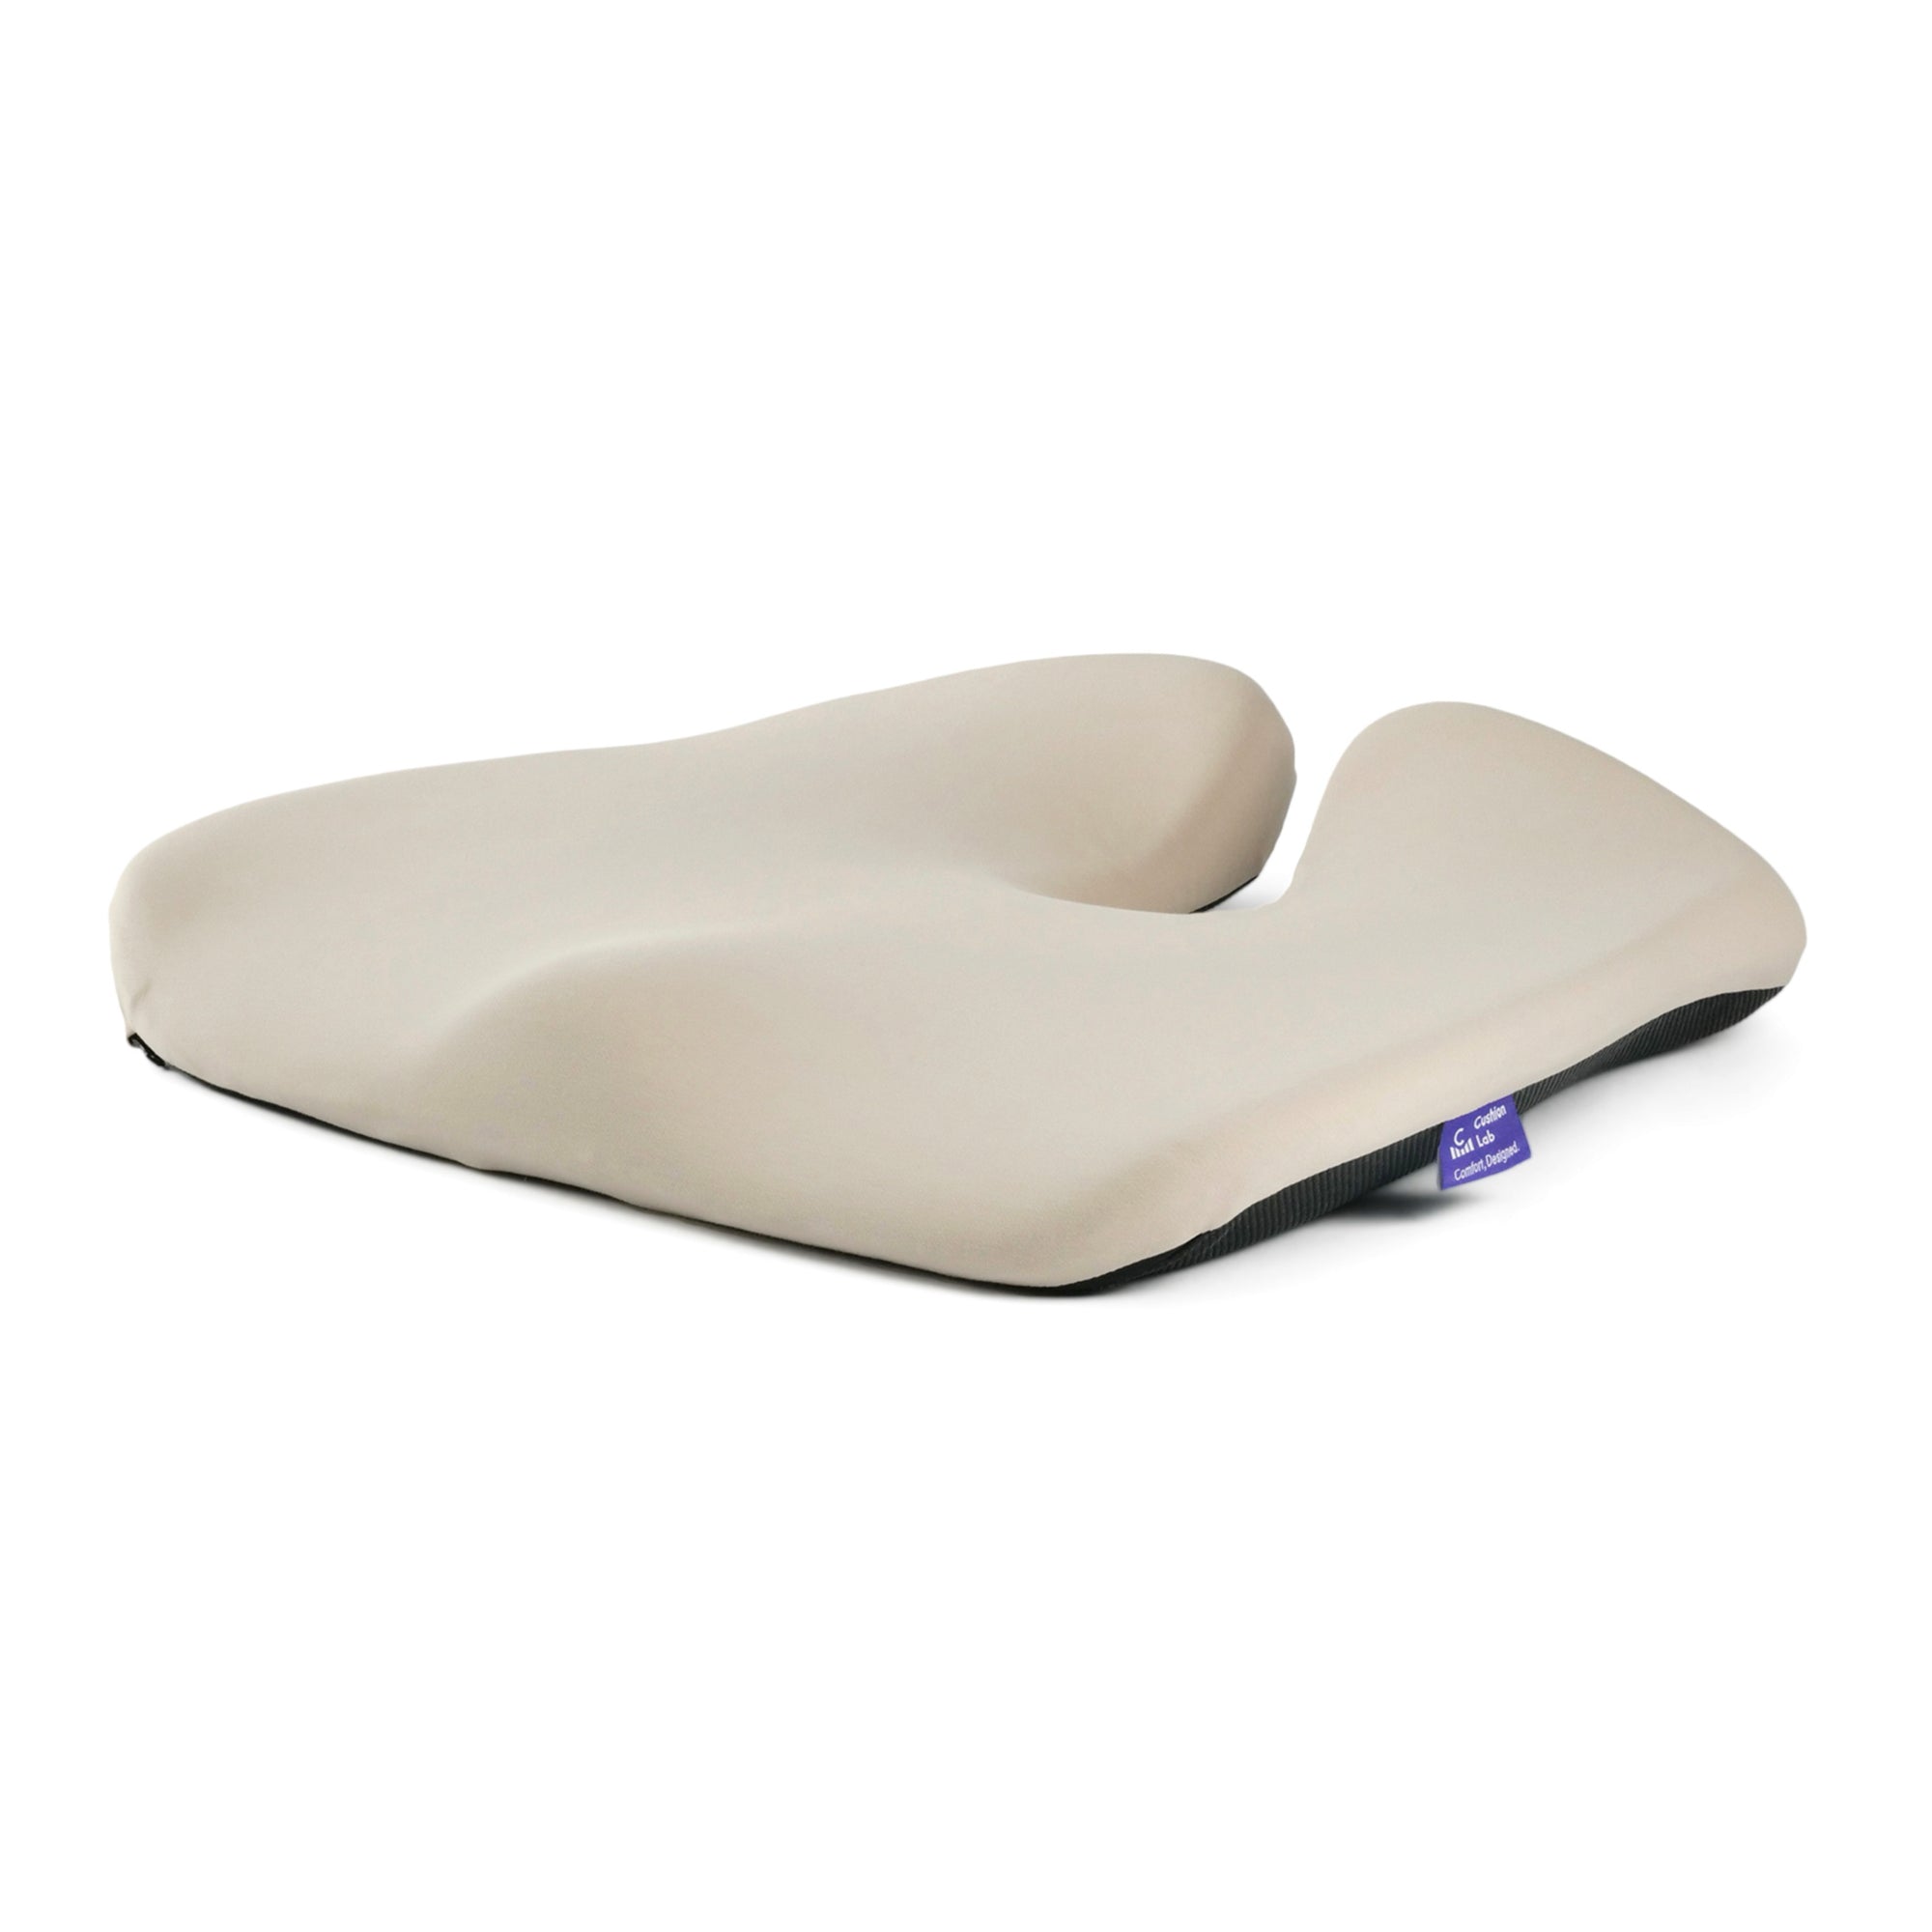 Pressure Relief Ergonomic Seat Cushion | Cushion Lab